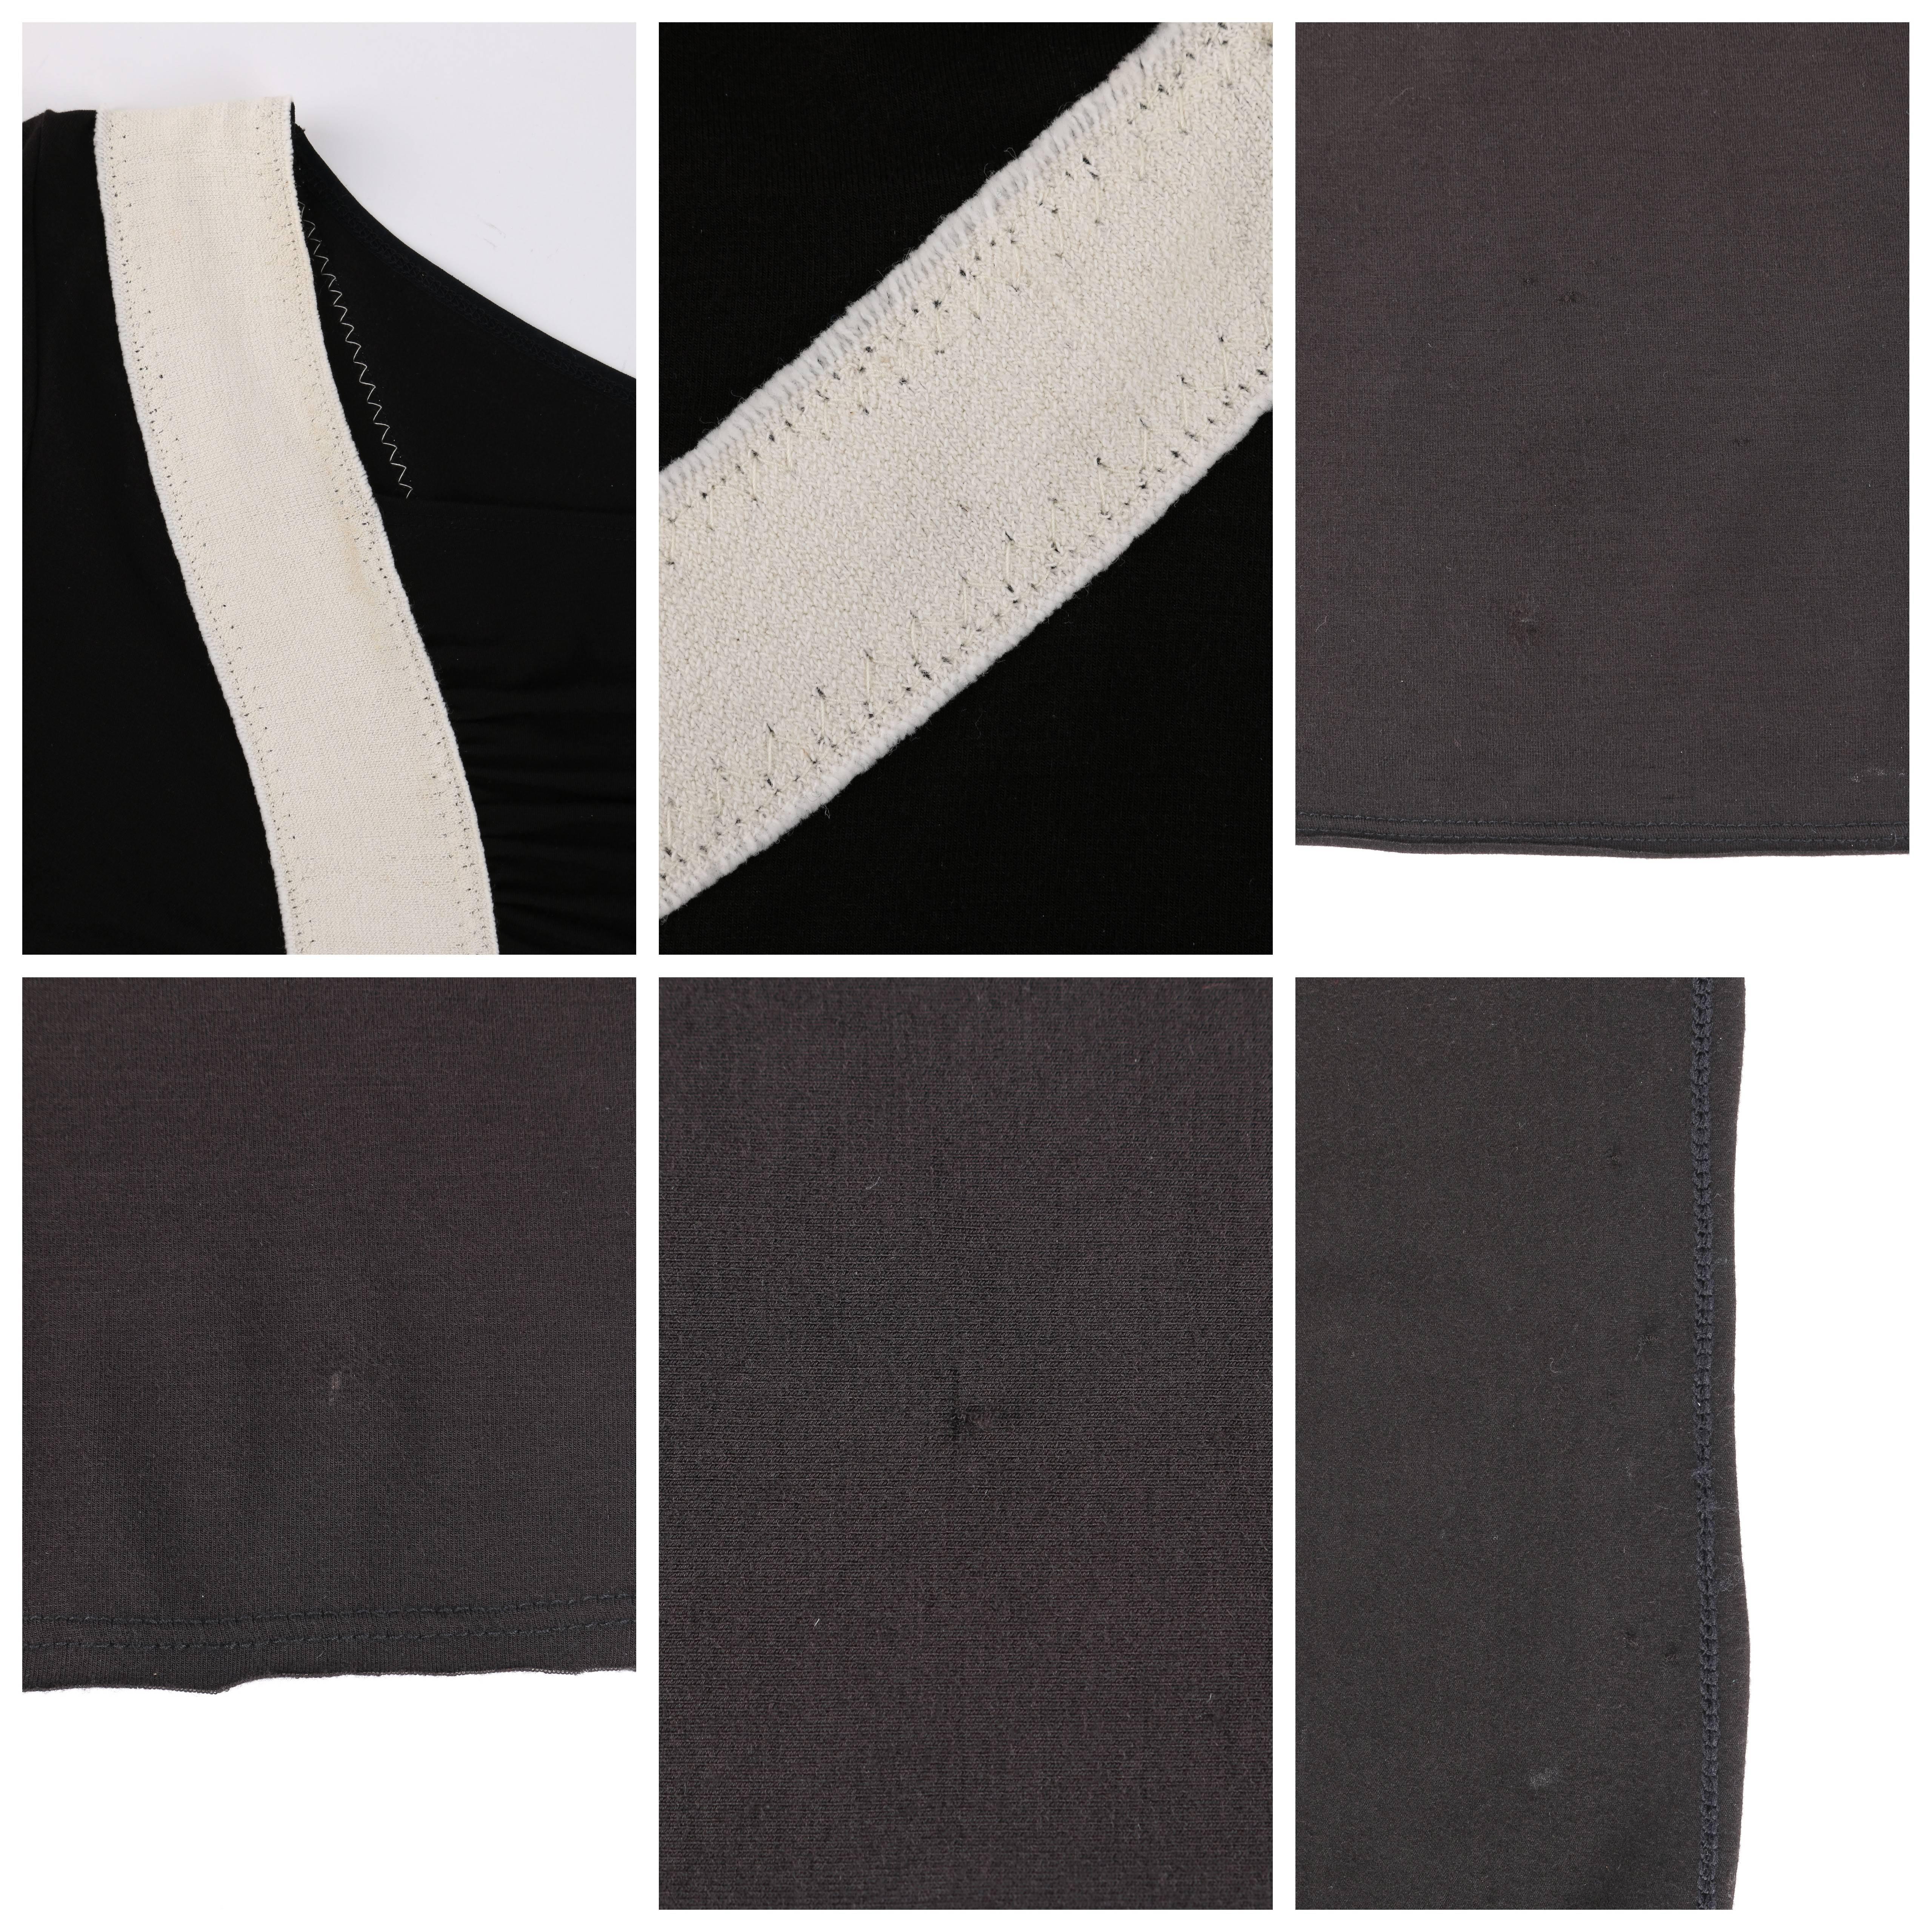 ISSEY MIYAKE S/S 2004 Black Jersey Knit Cross Bandage Sweater Top 1